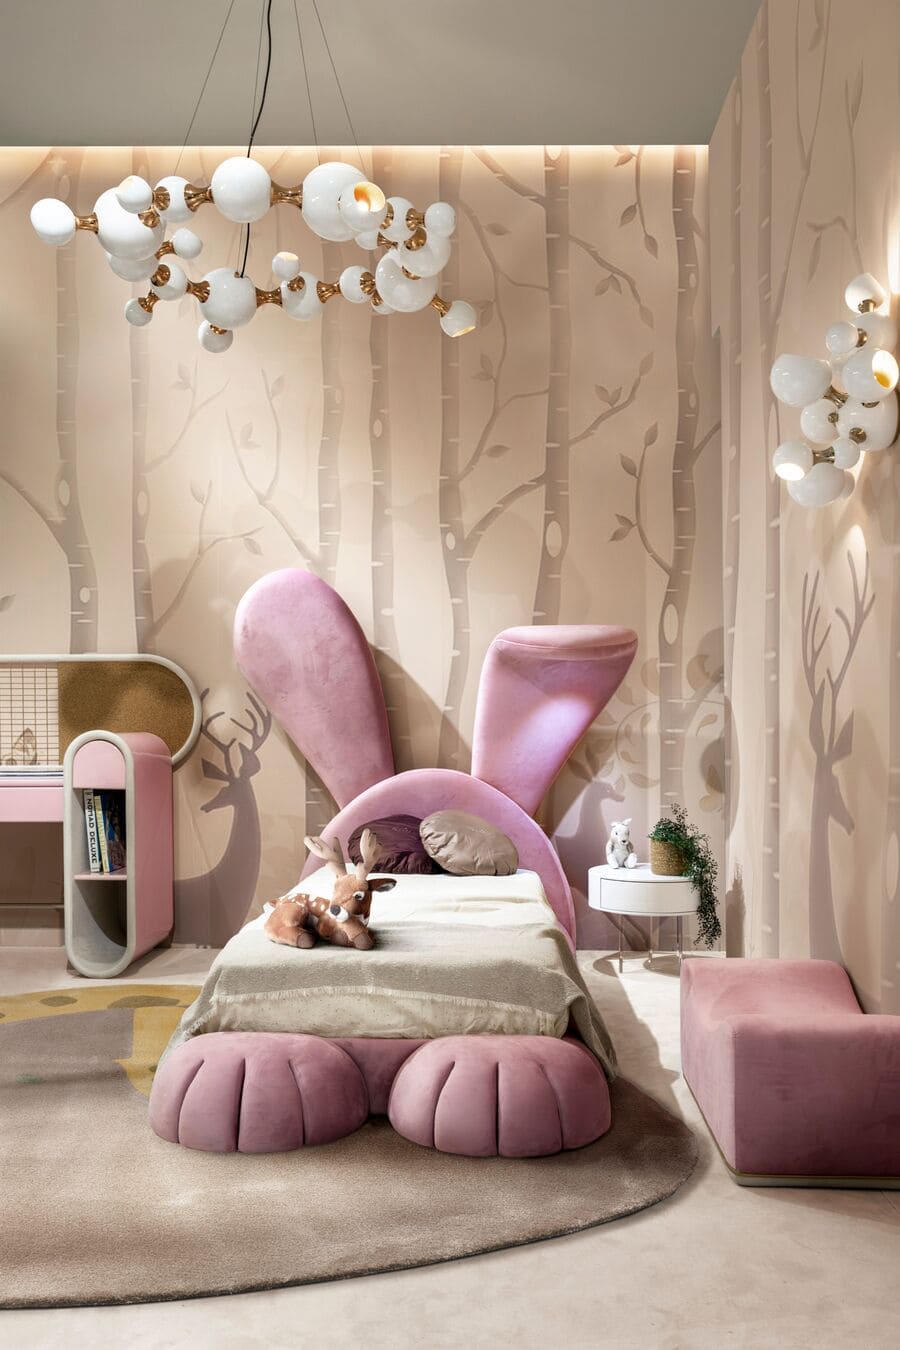 Luxury Modern Girls' Bedroom